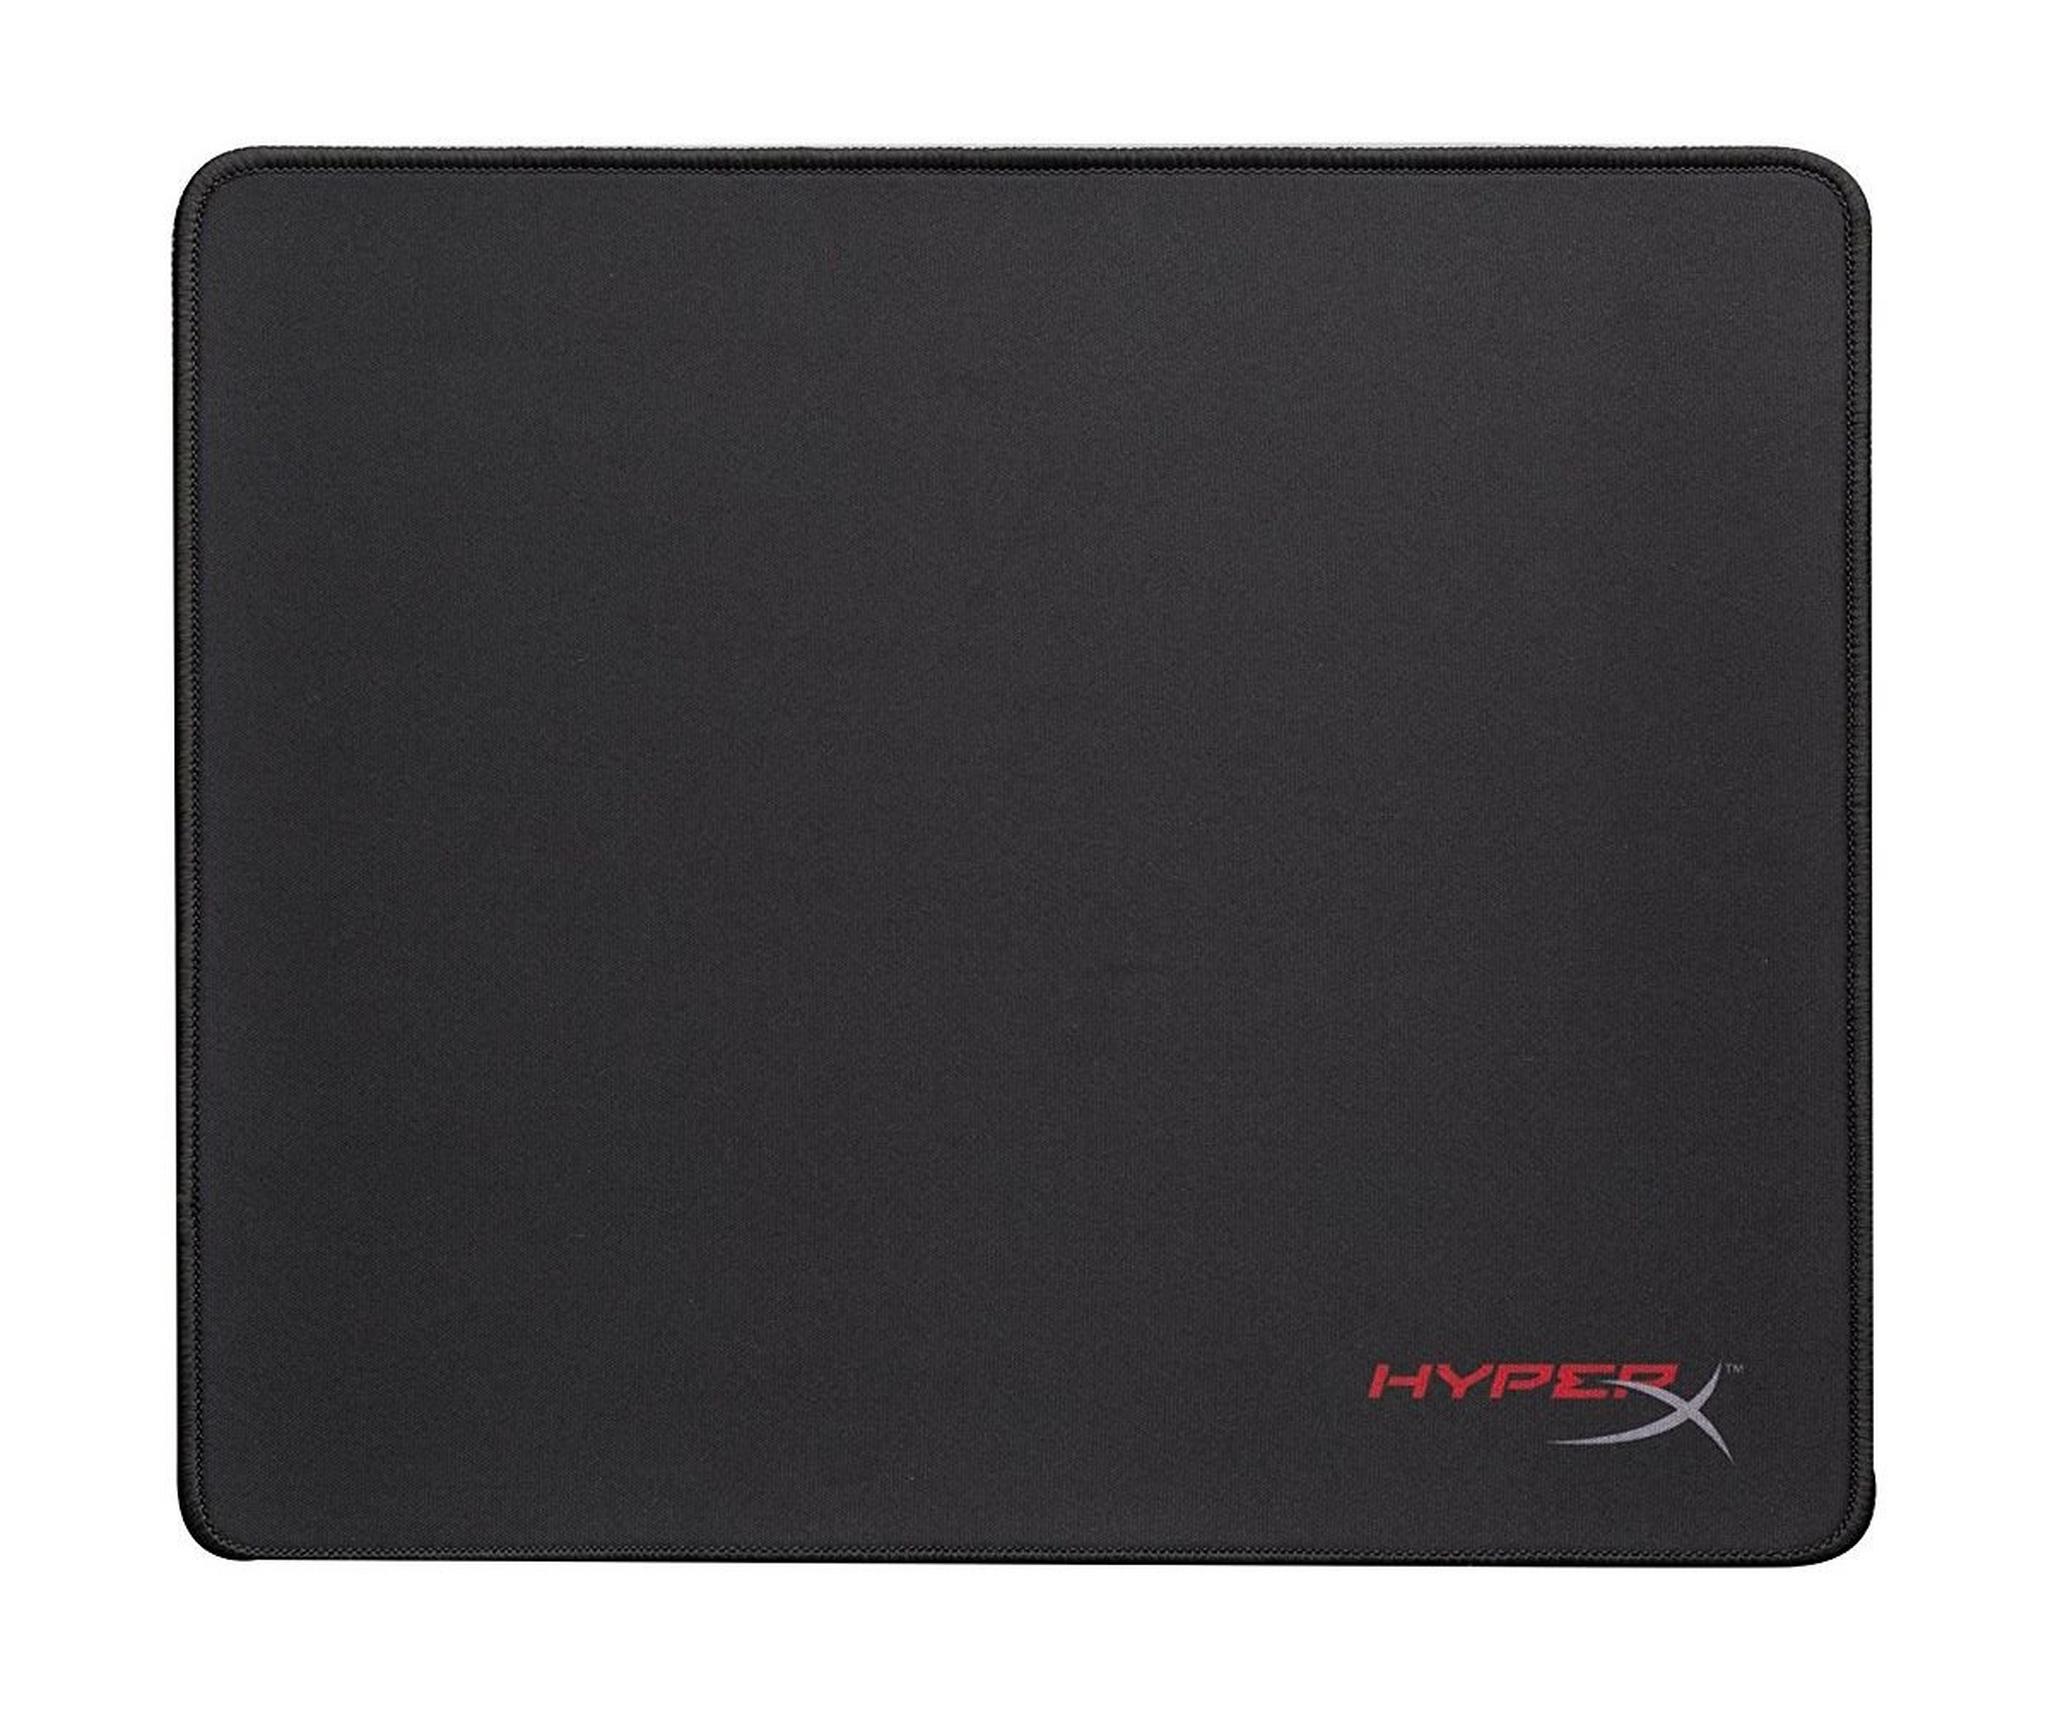 HyperX Fury Pro Mouse Gaming Pad (HX-MPFS) - Medium Black